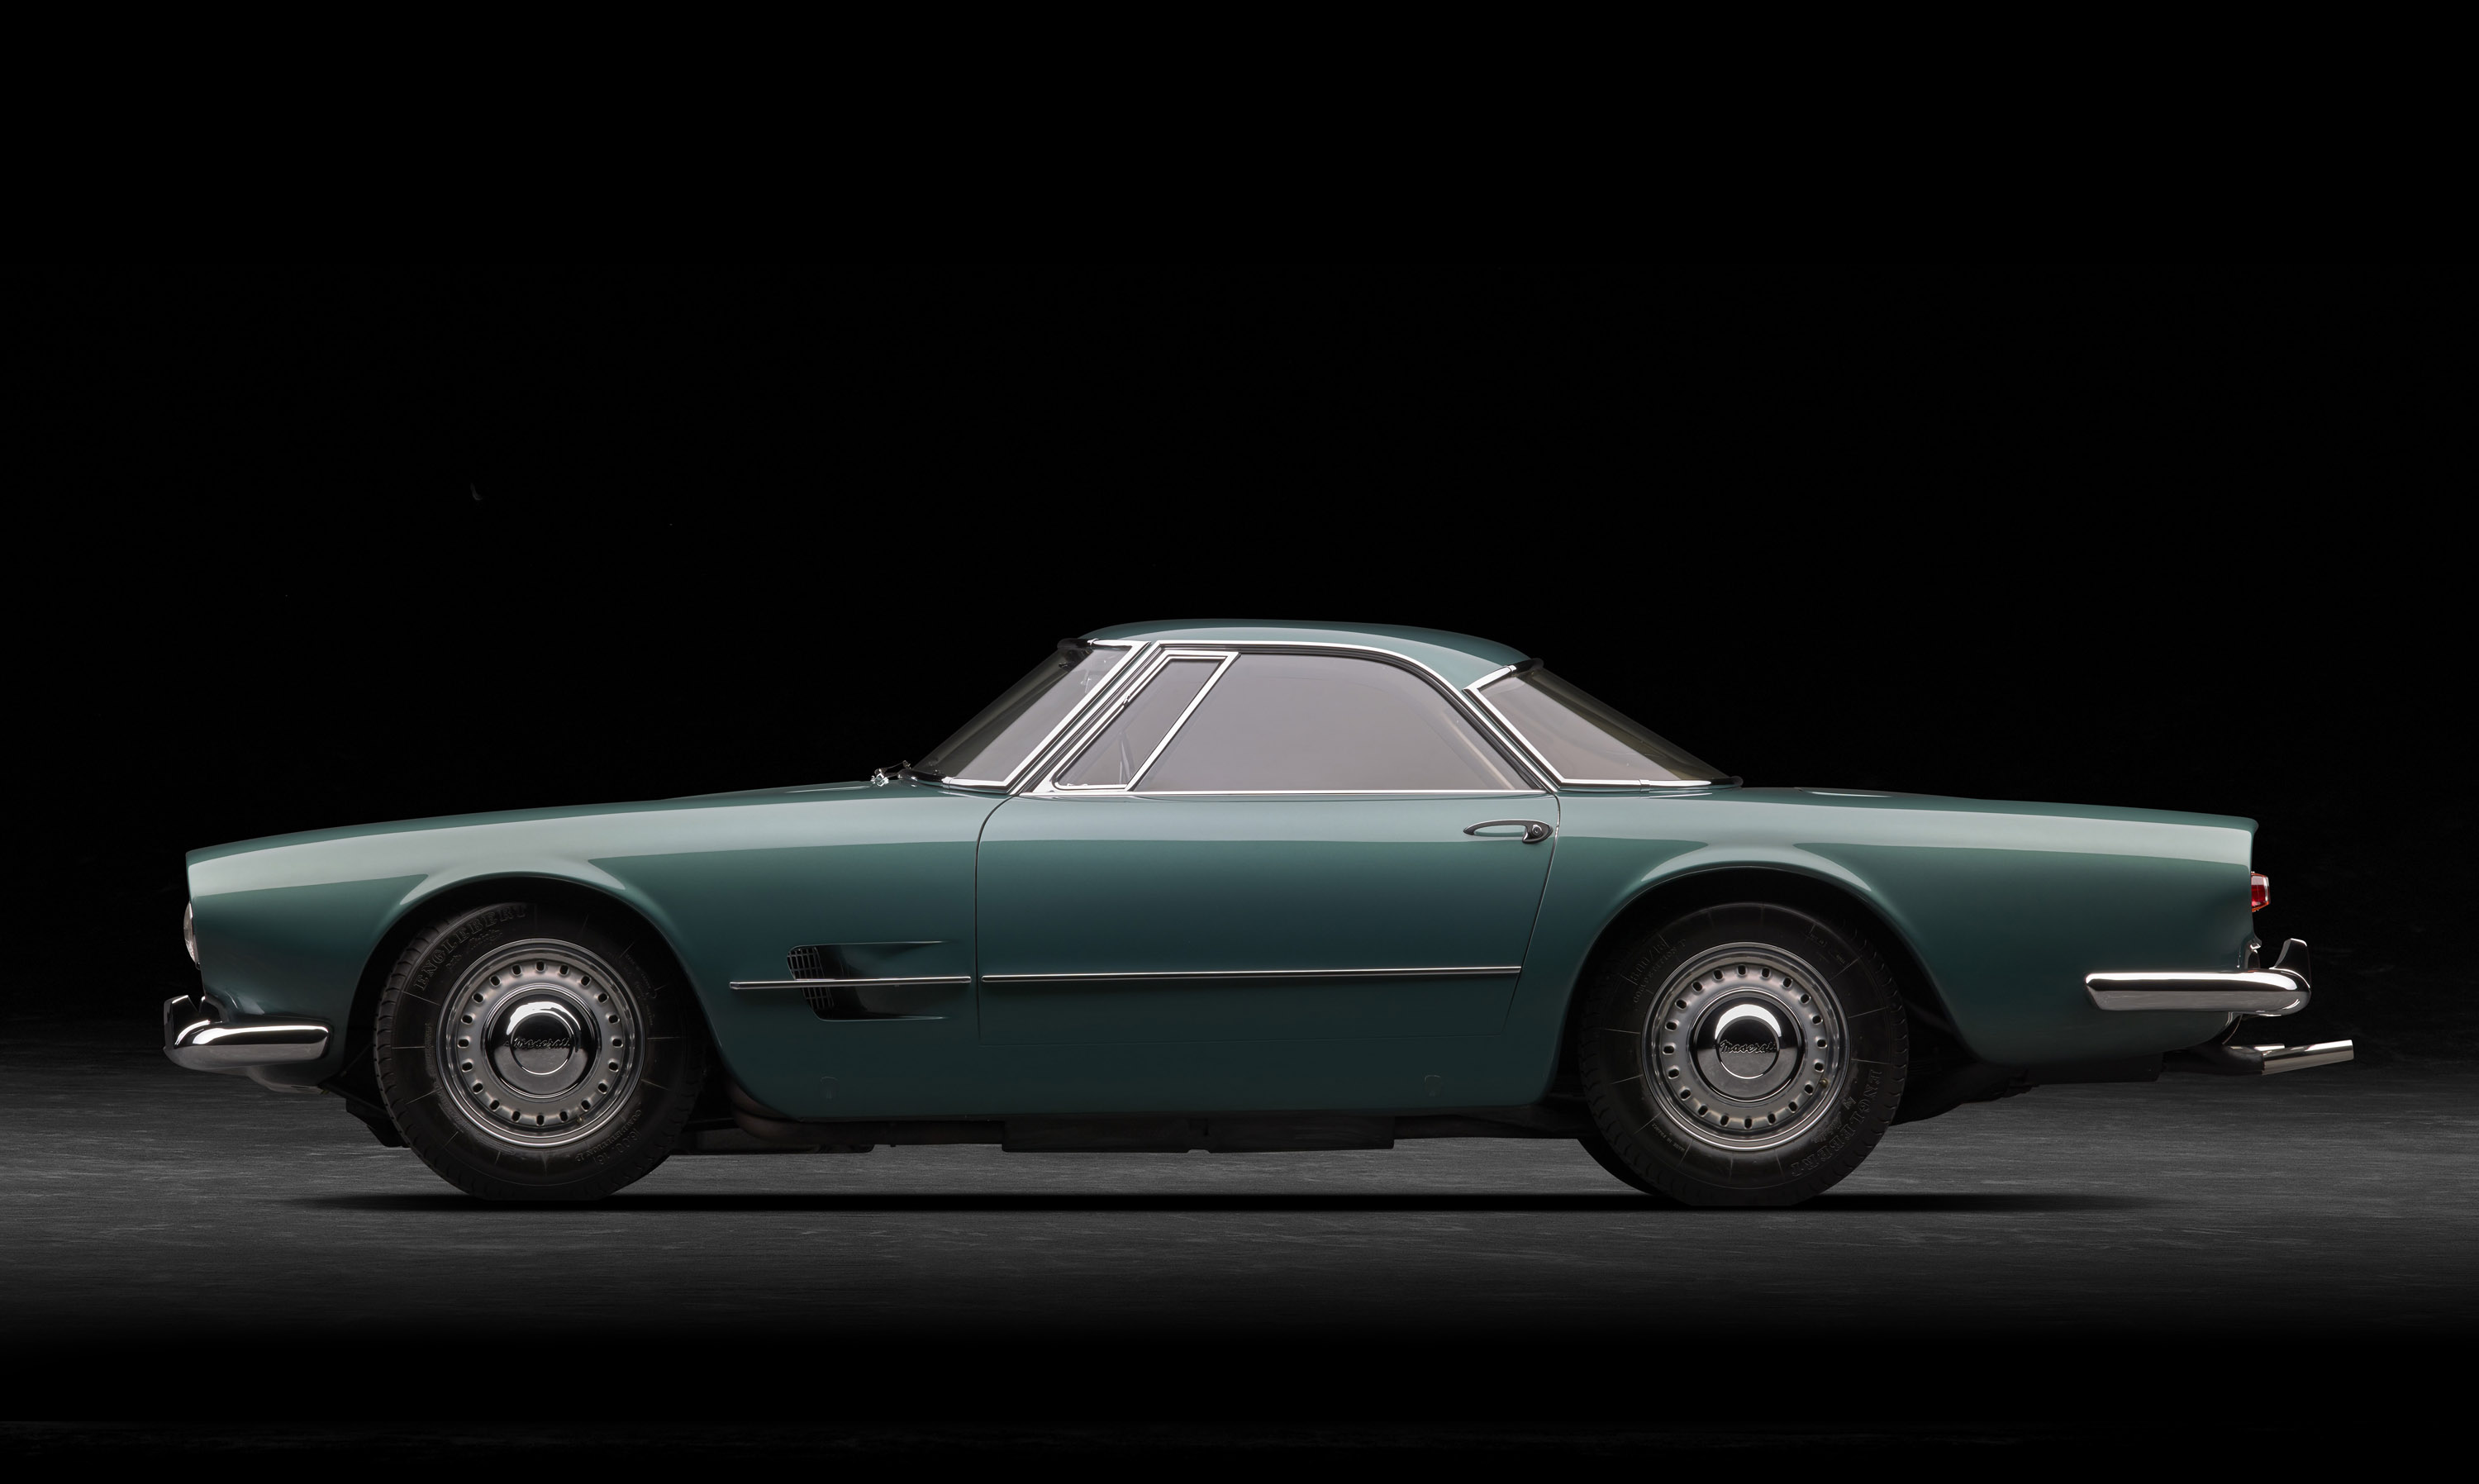 1959 Maserati 5000 GT